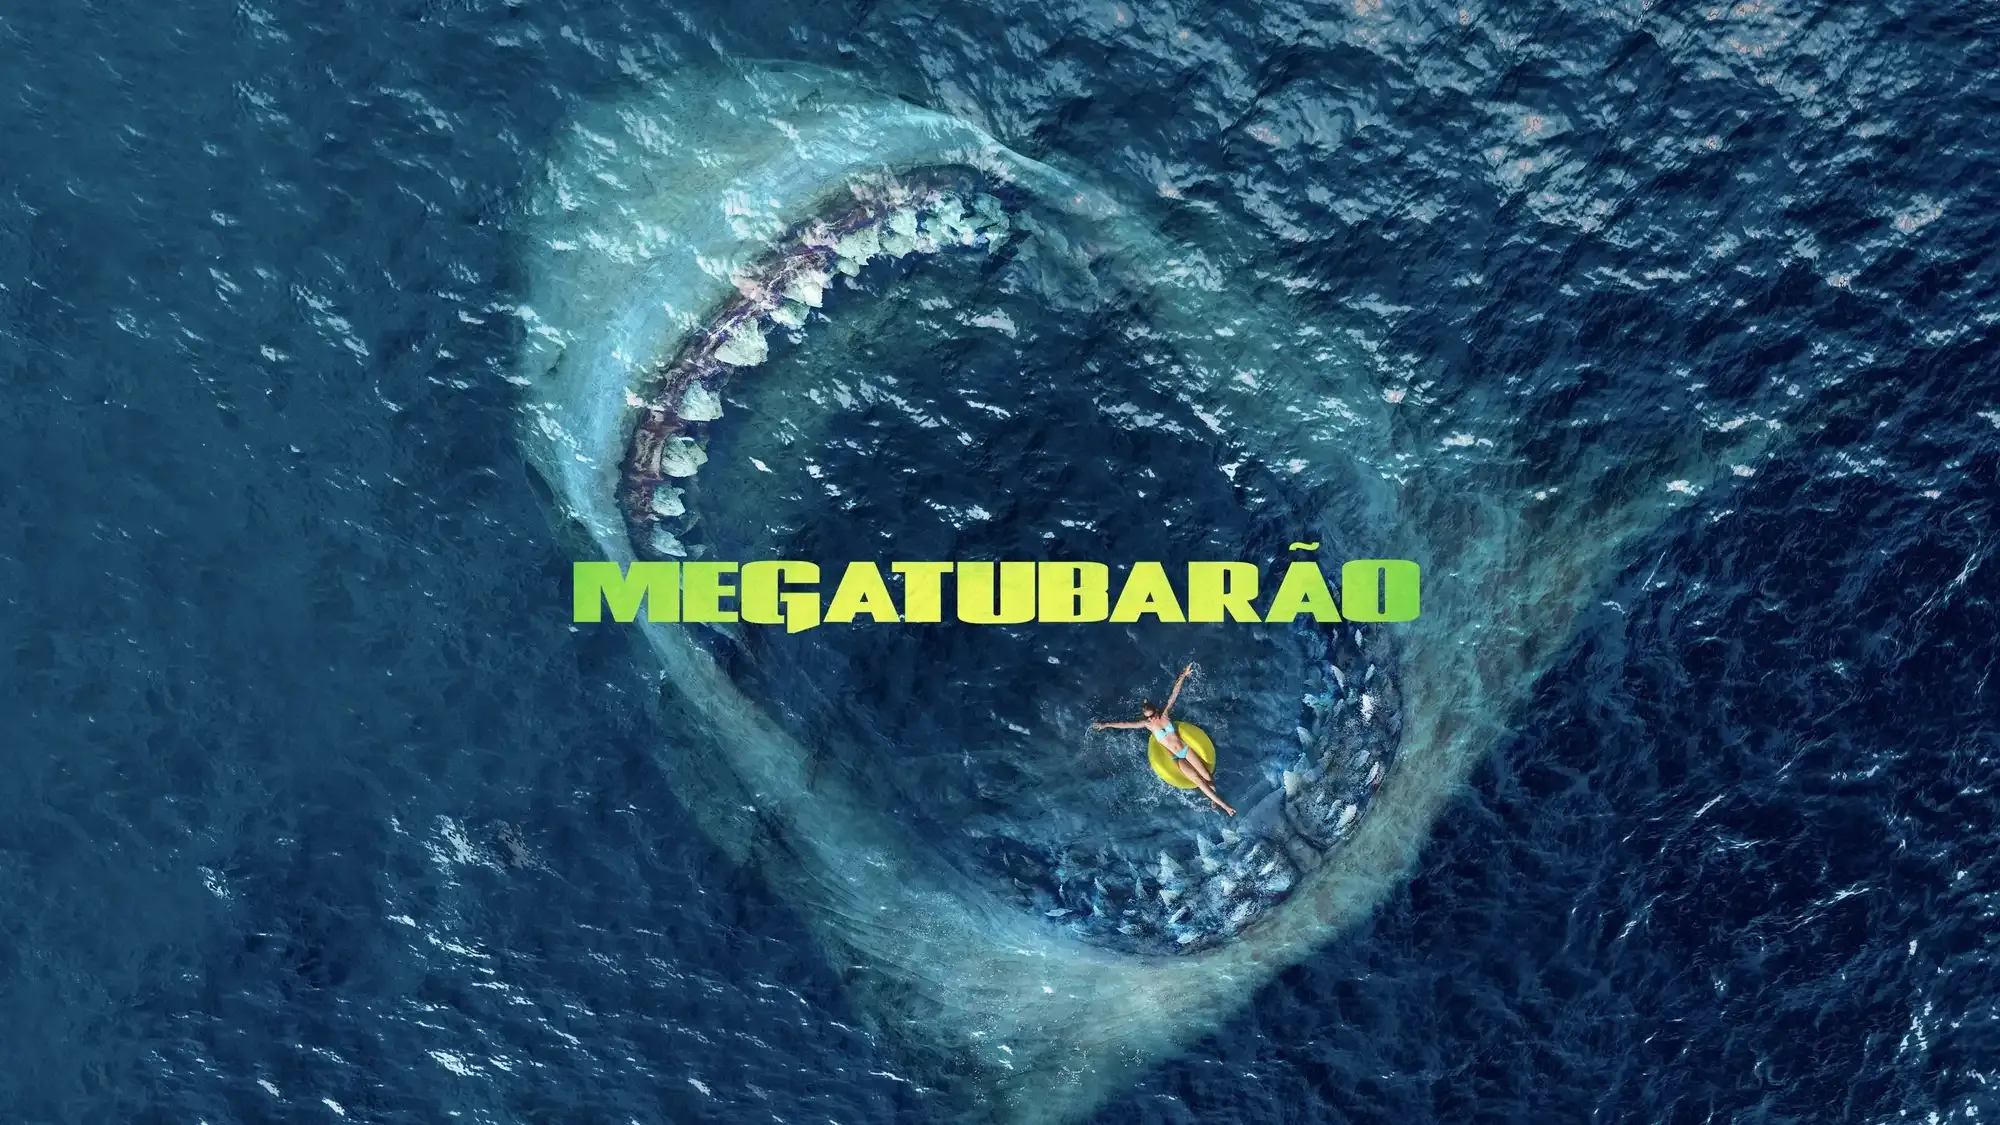 The Meg movie review